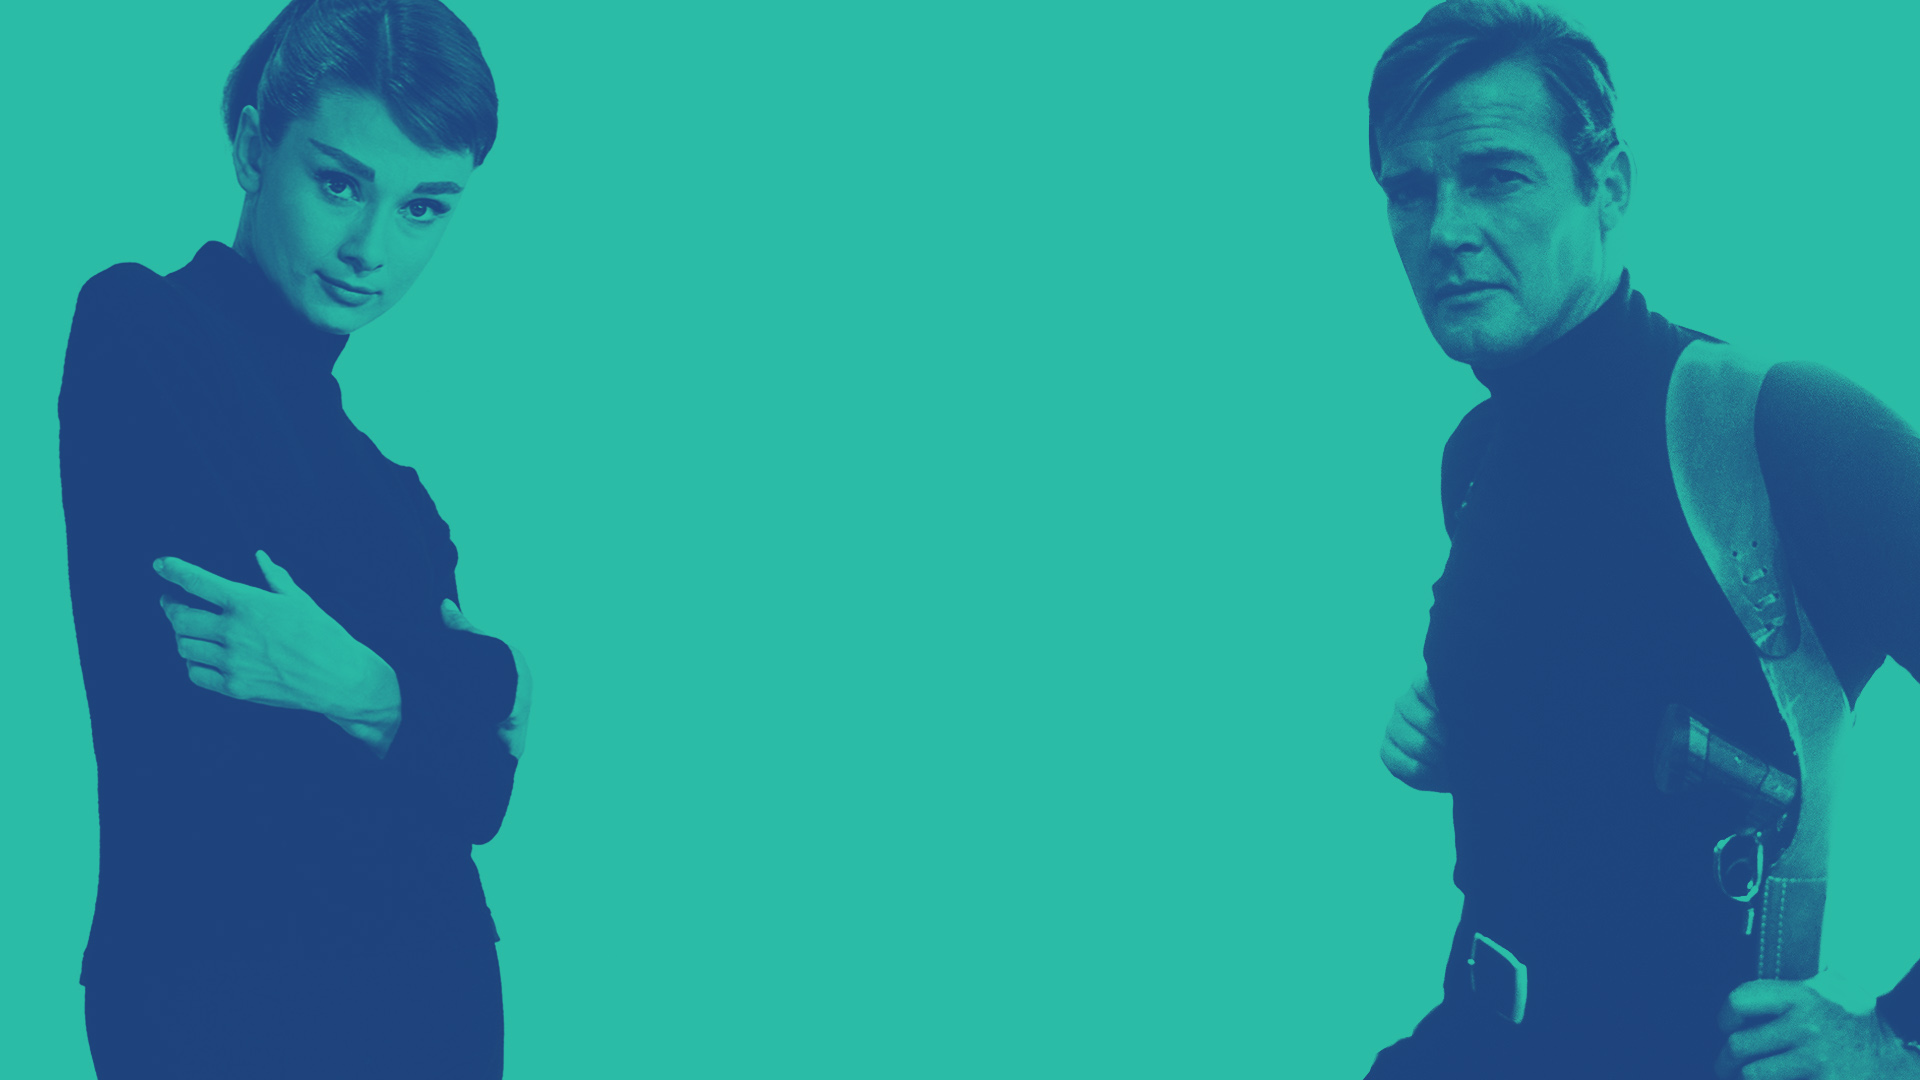 Background image with Audrey Hepburn and Roger Moore wearing turtlenecks